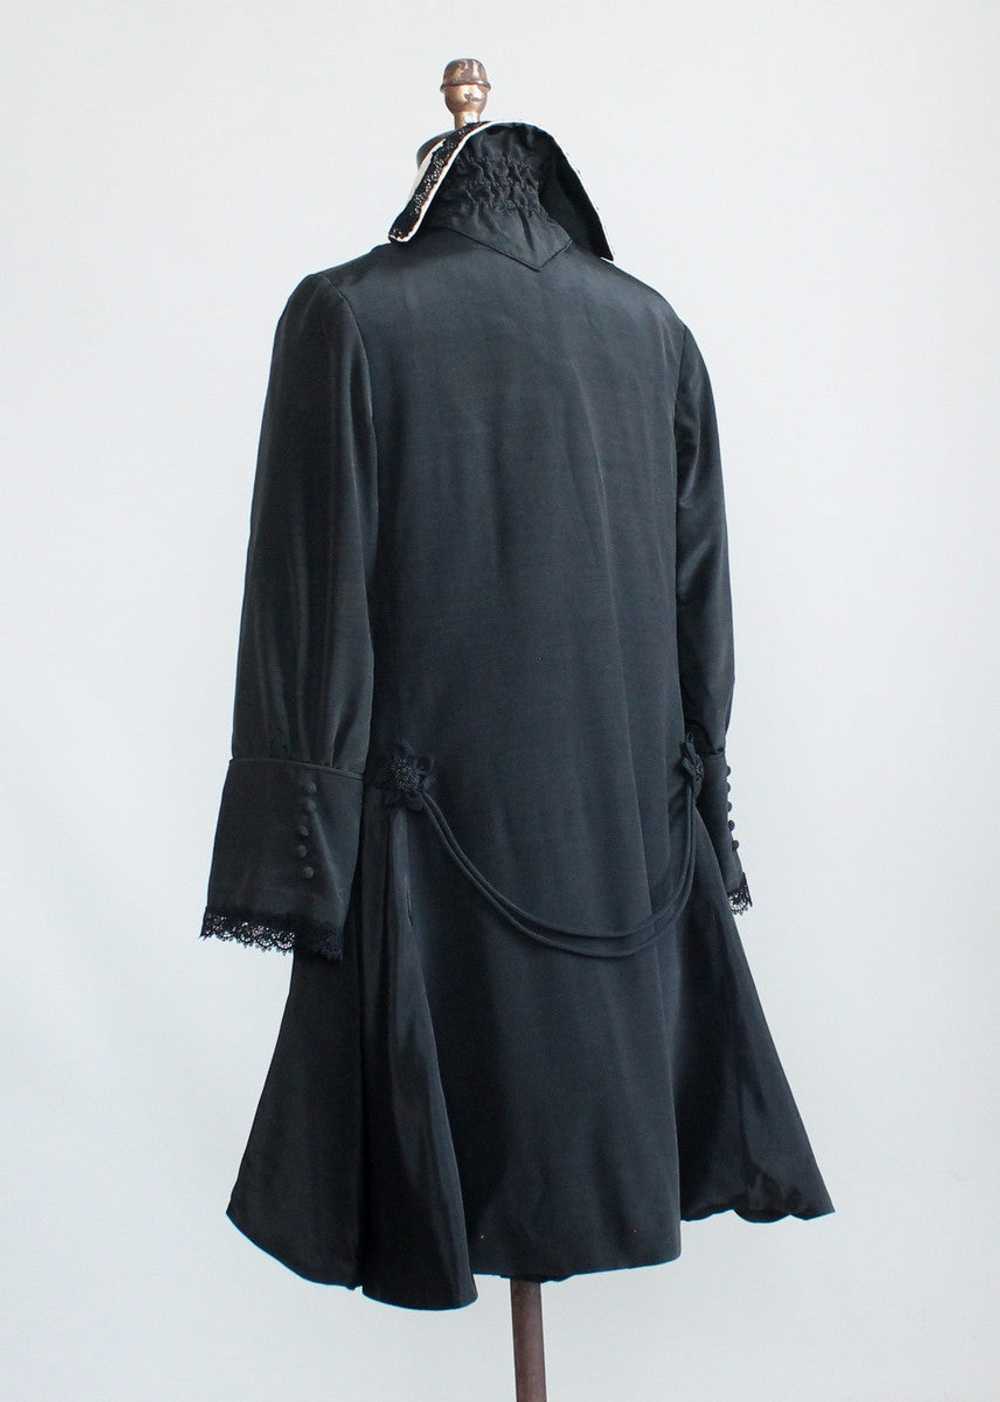 Antique Edwardian Black Silk Coat with Stand Up C… - image 7